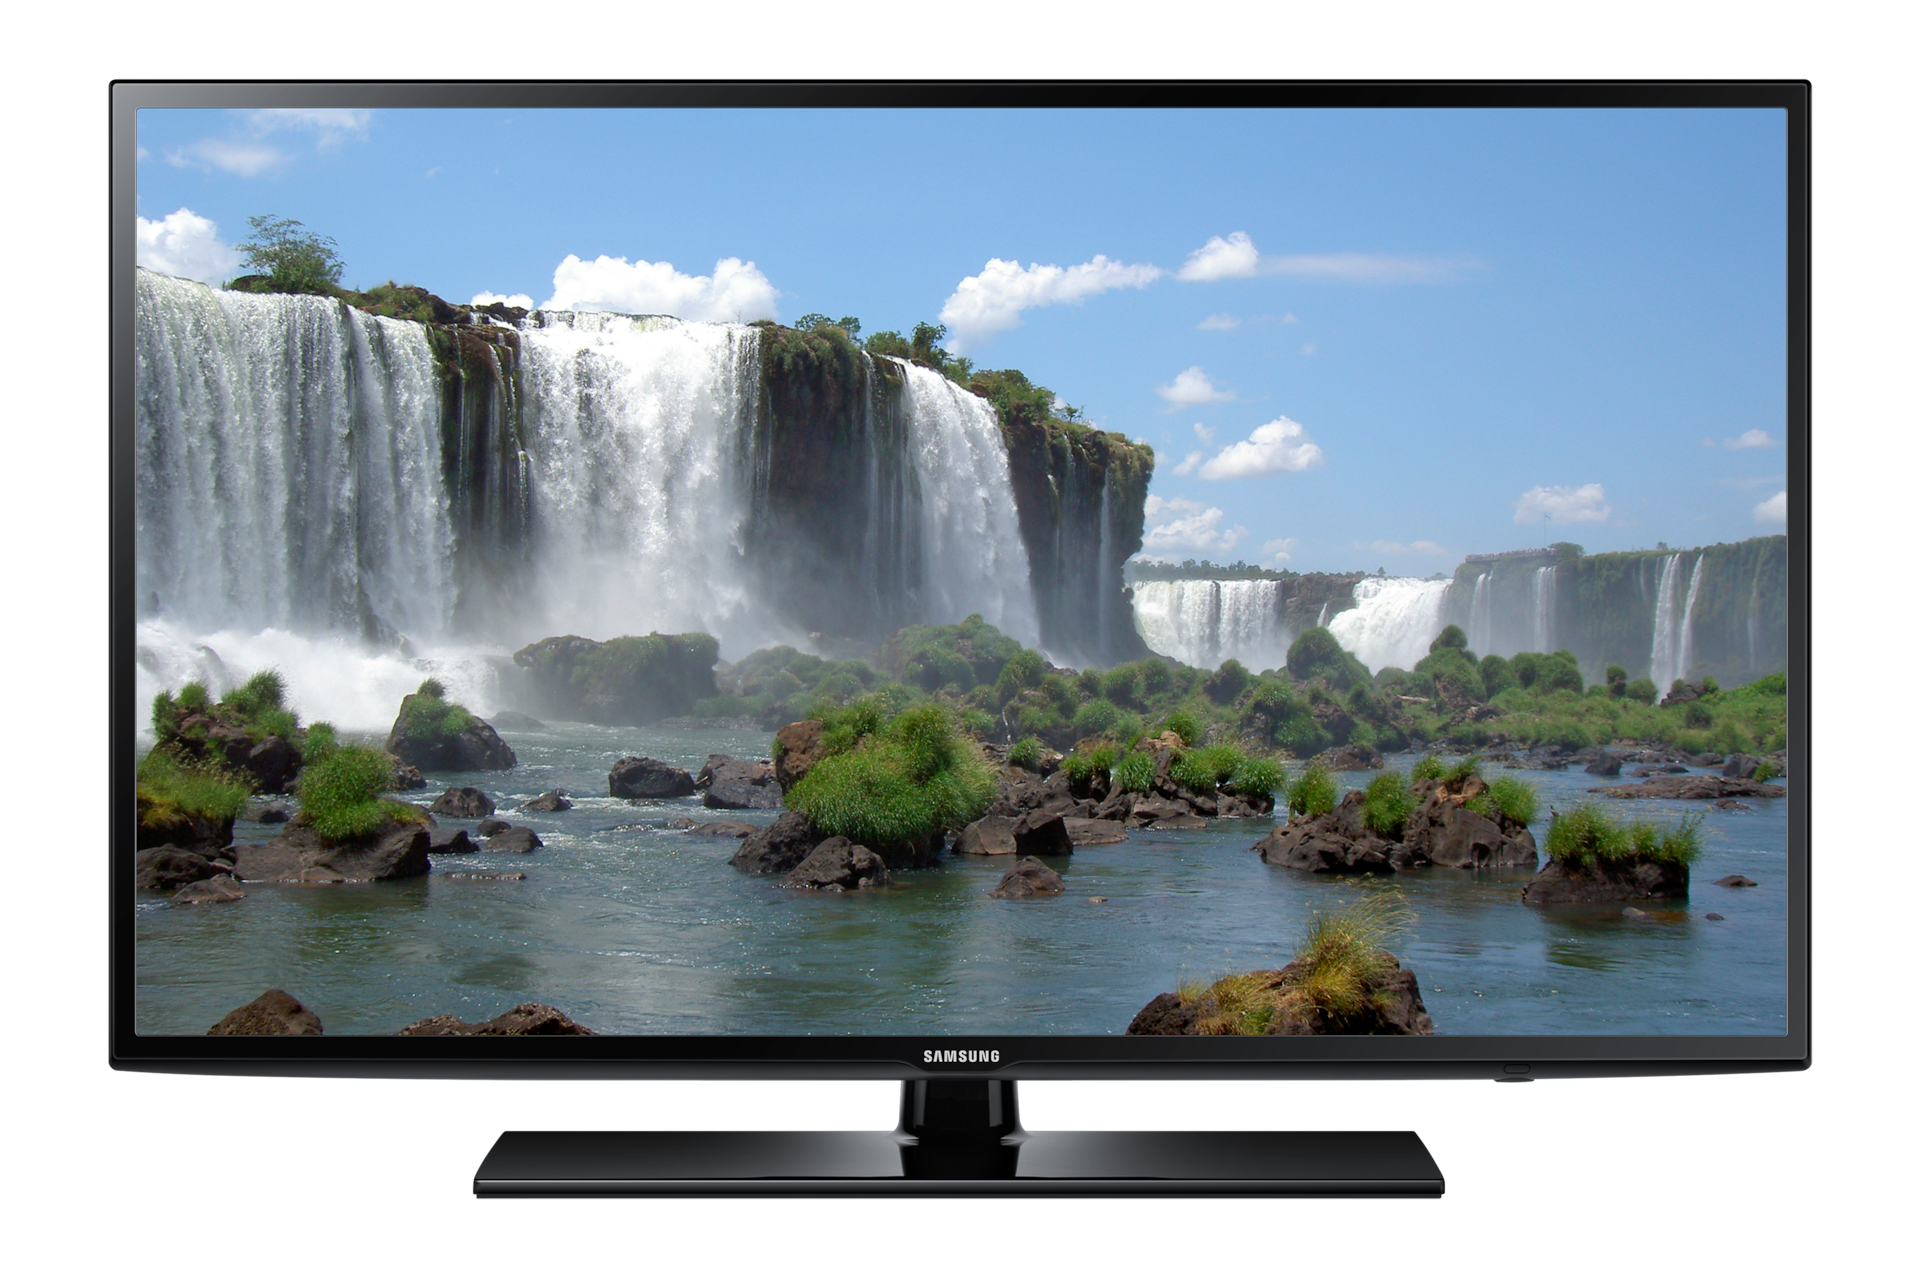 Televisor SAMSUNG 60 Pulgadas LED Uhd4K Smart TV